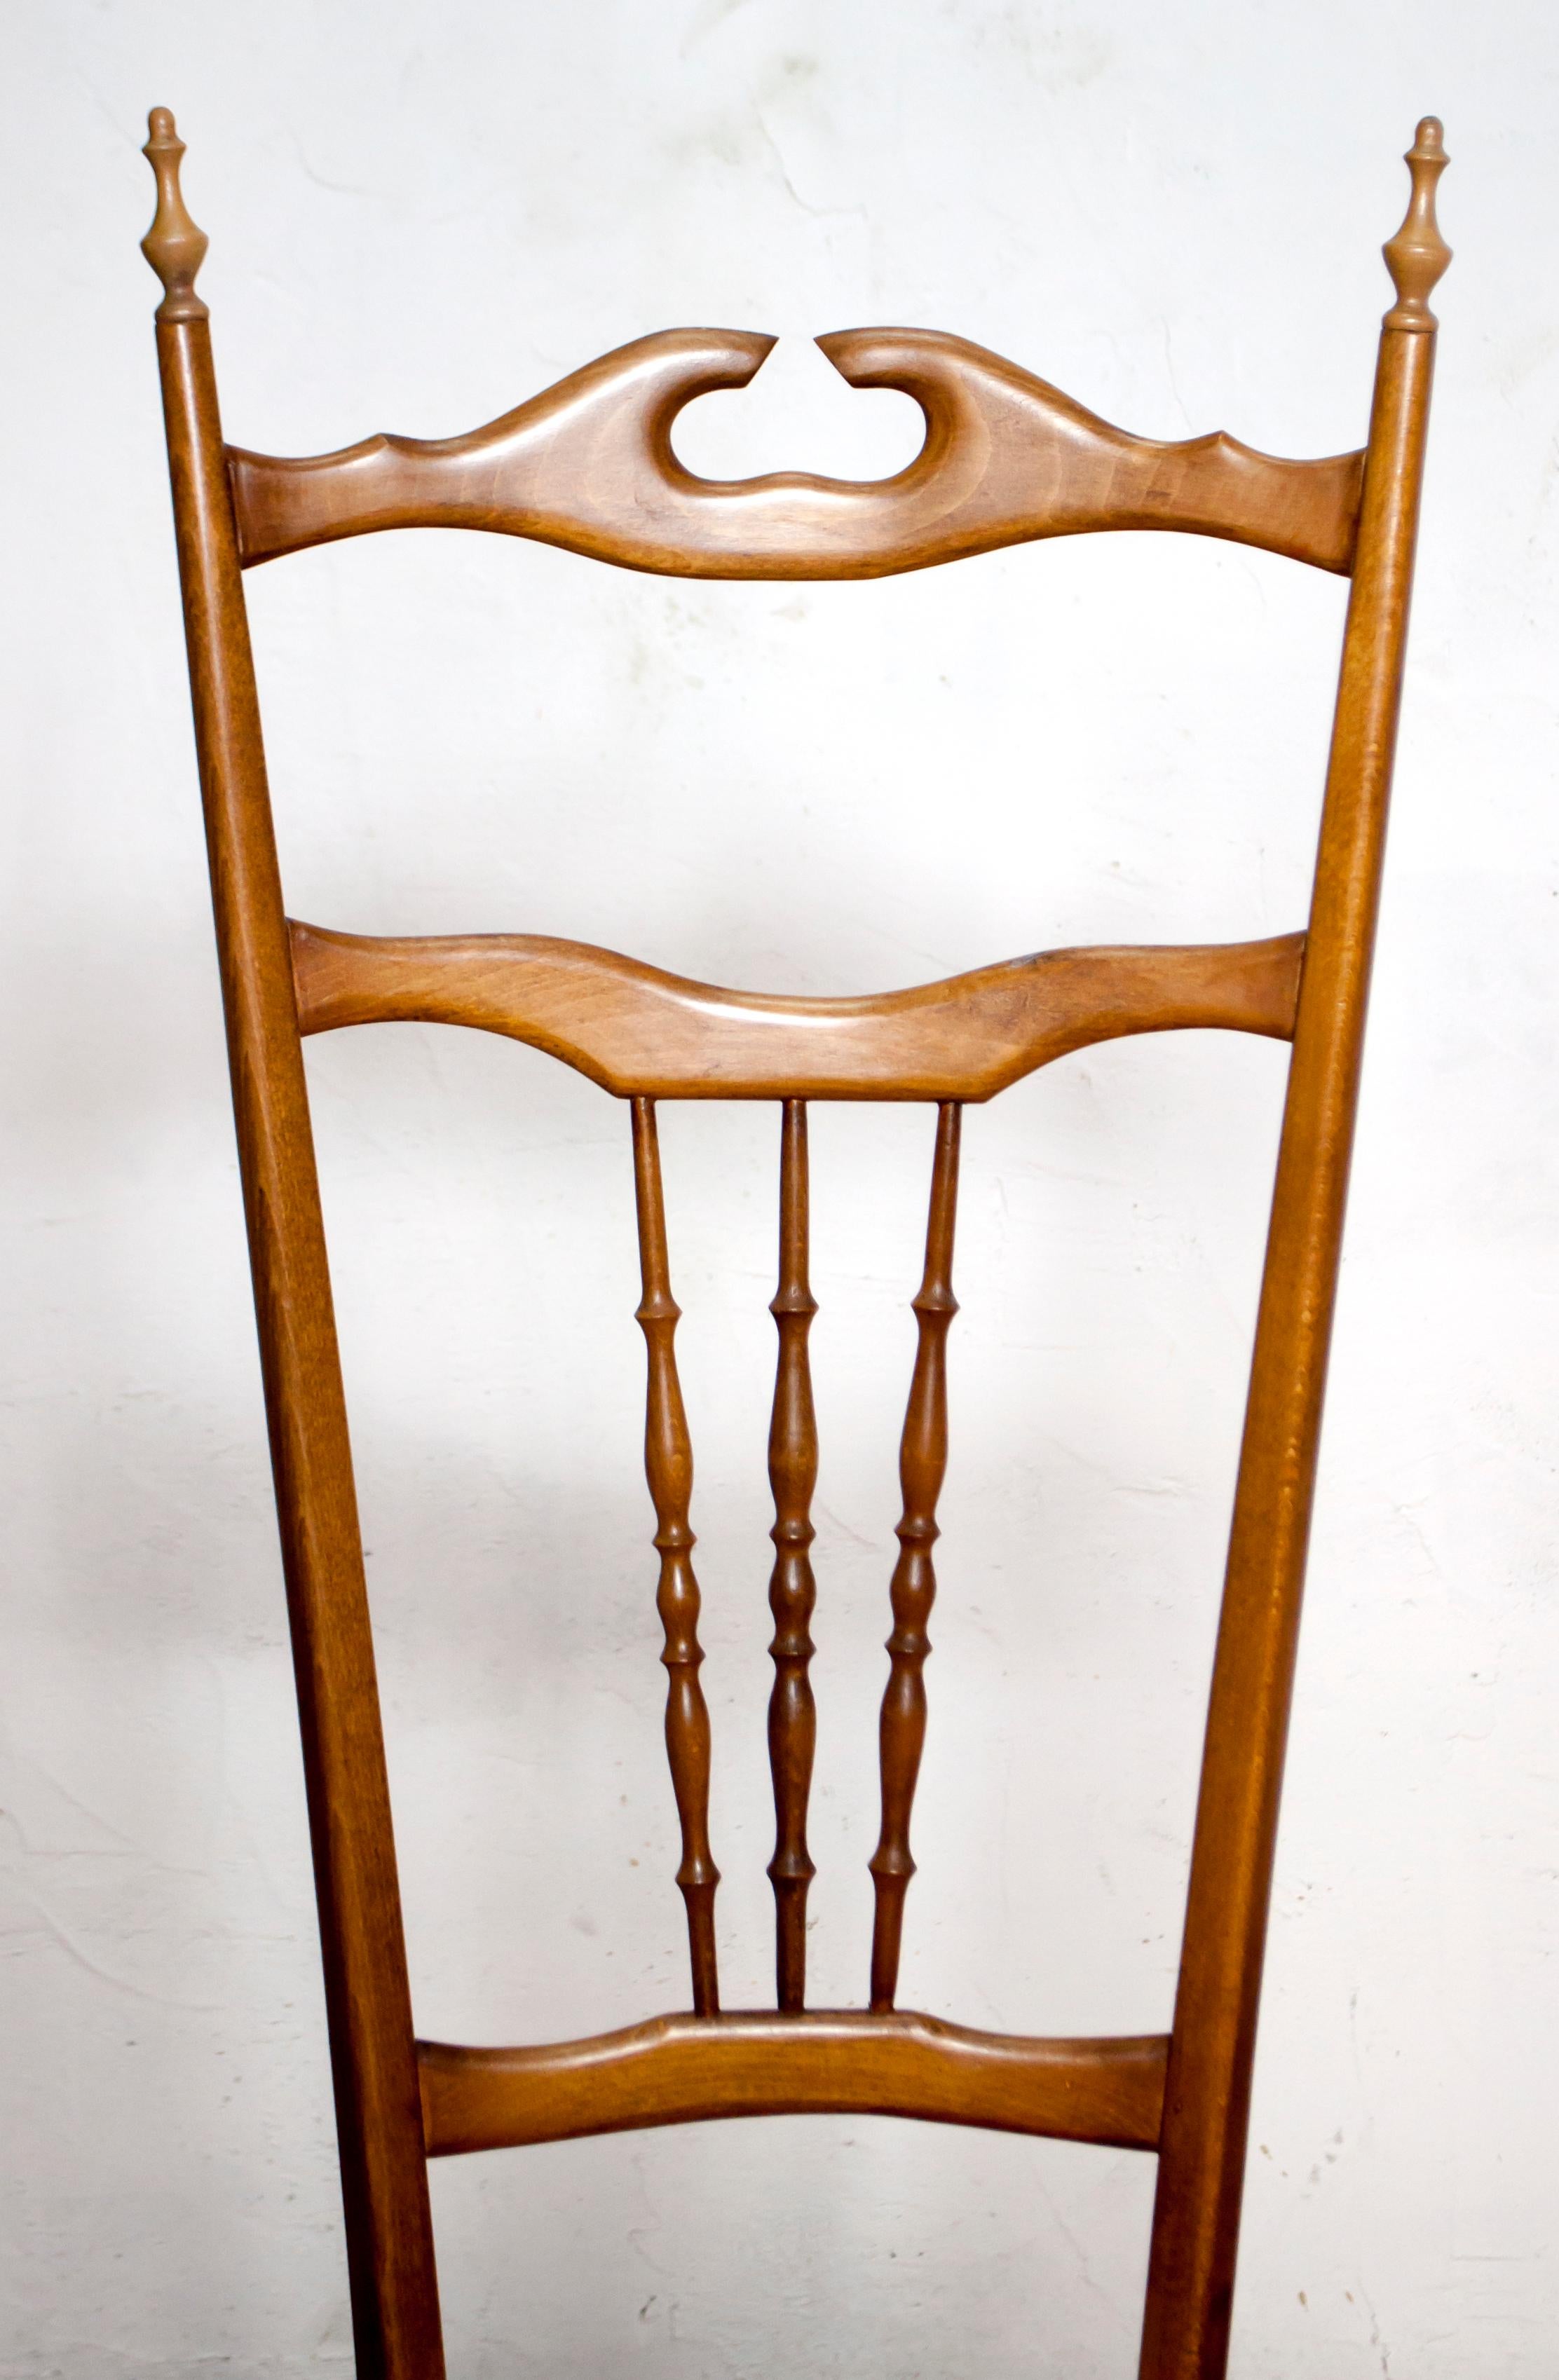 Beech Pair of Gaetano Descalzi Mid-Century Italian Chiavari High Back Chairs, 1950s For Sale